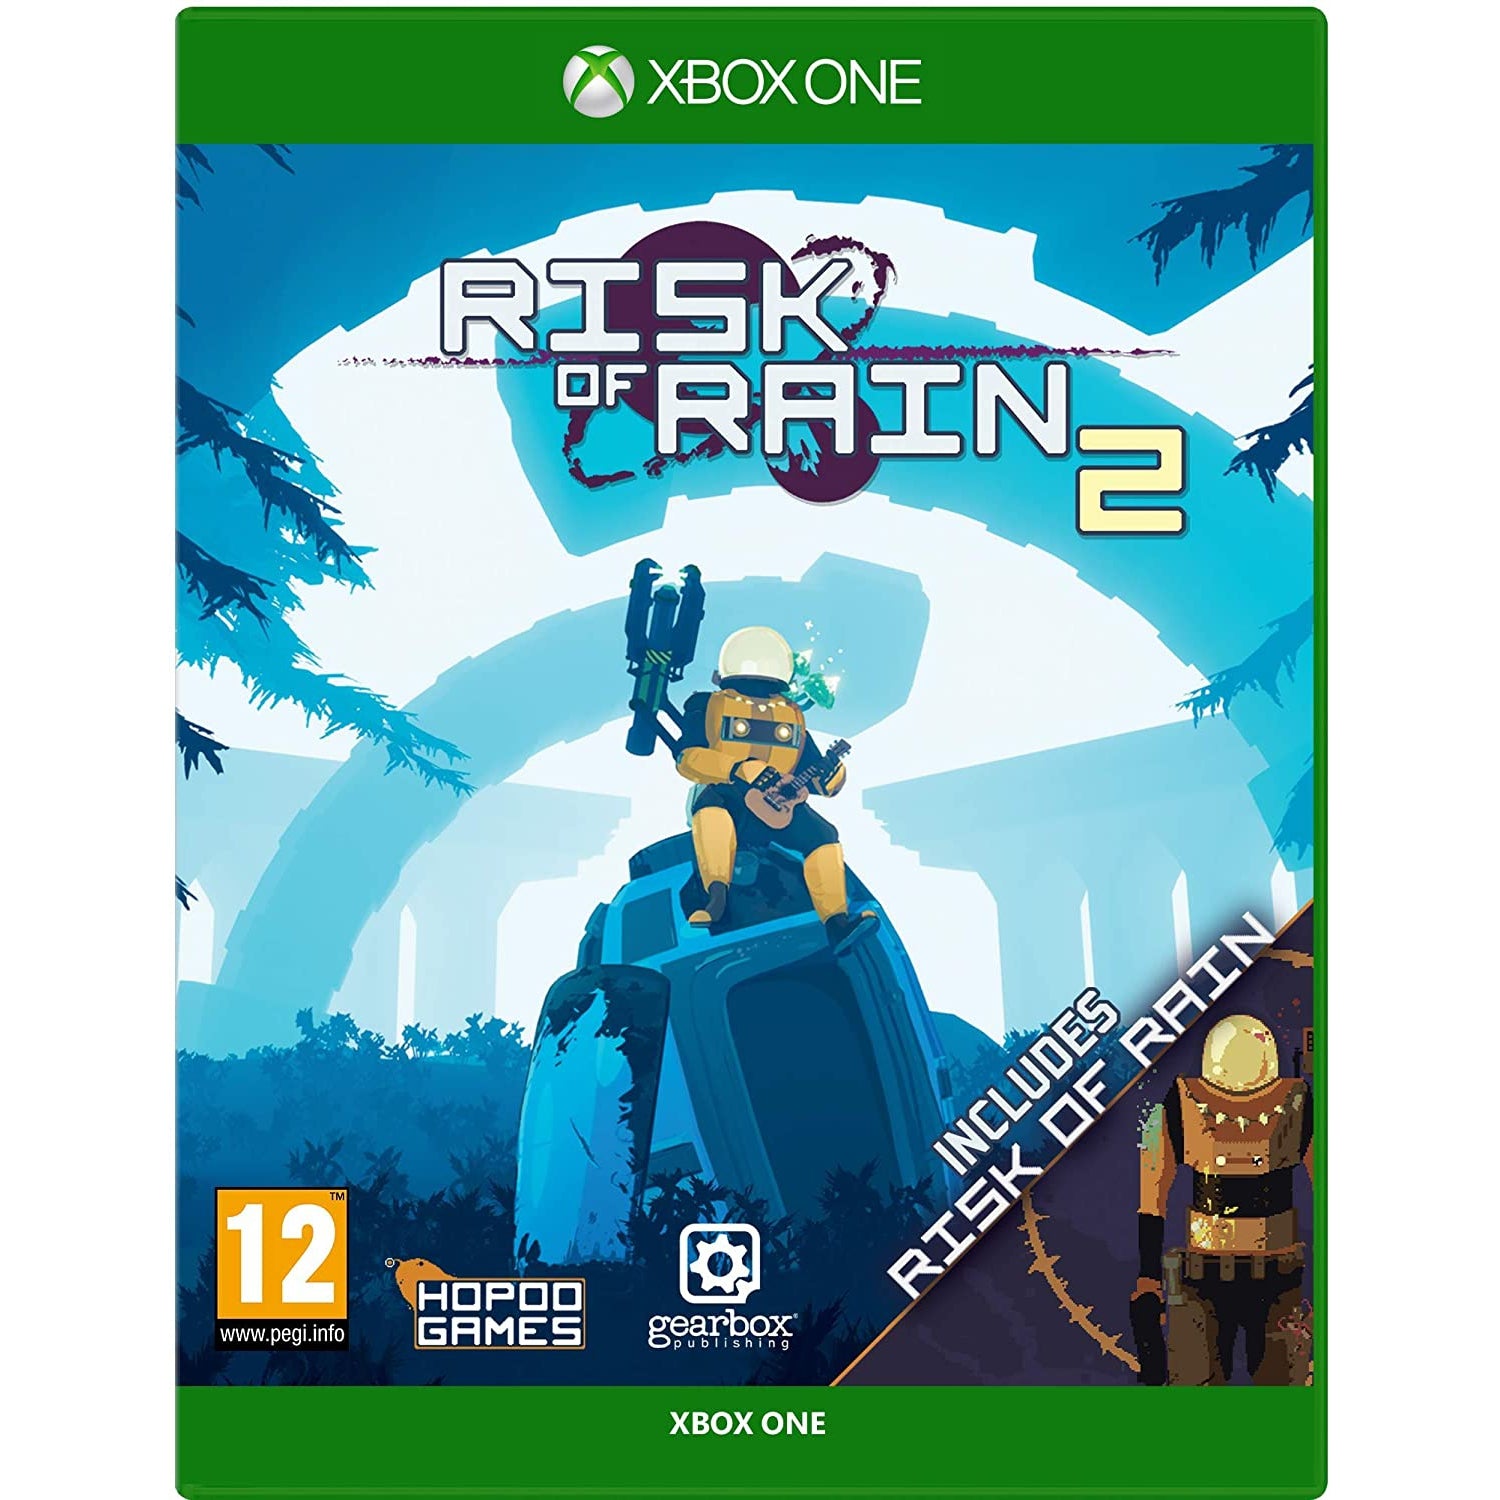 Risk Of Rain 2 (Xbox One)